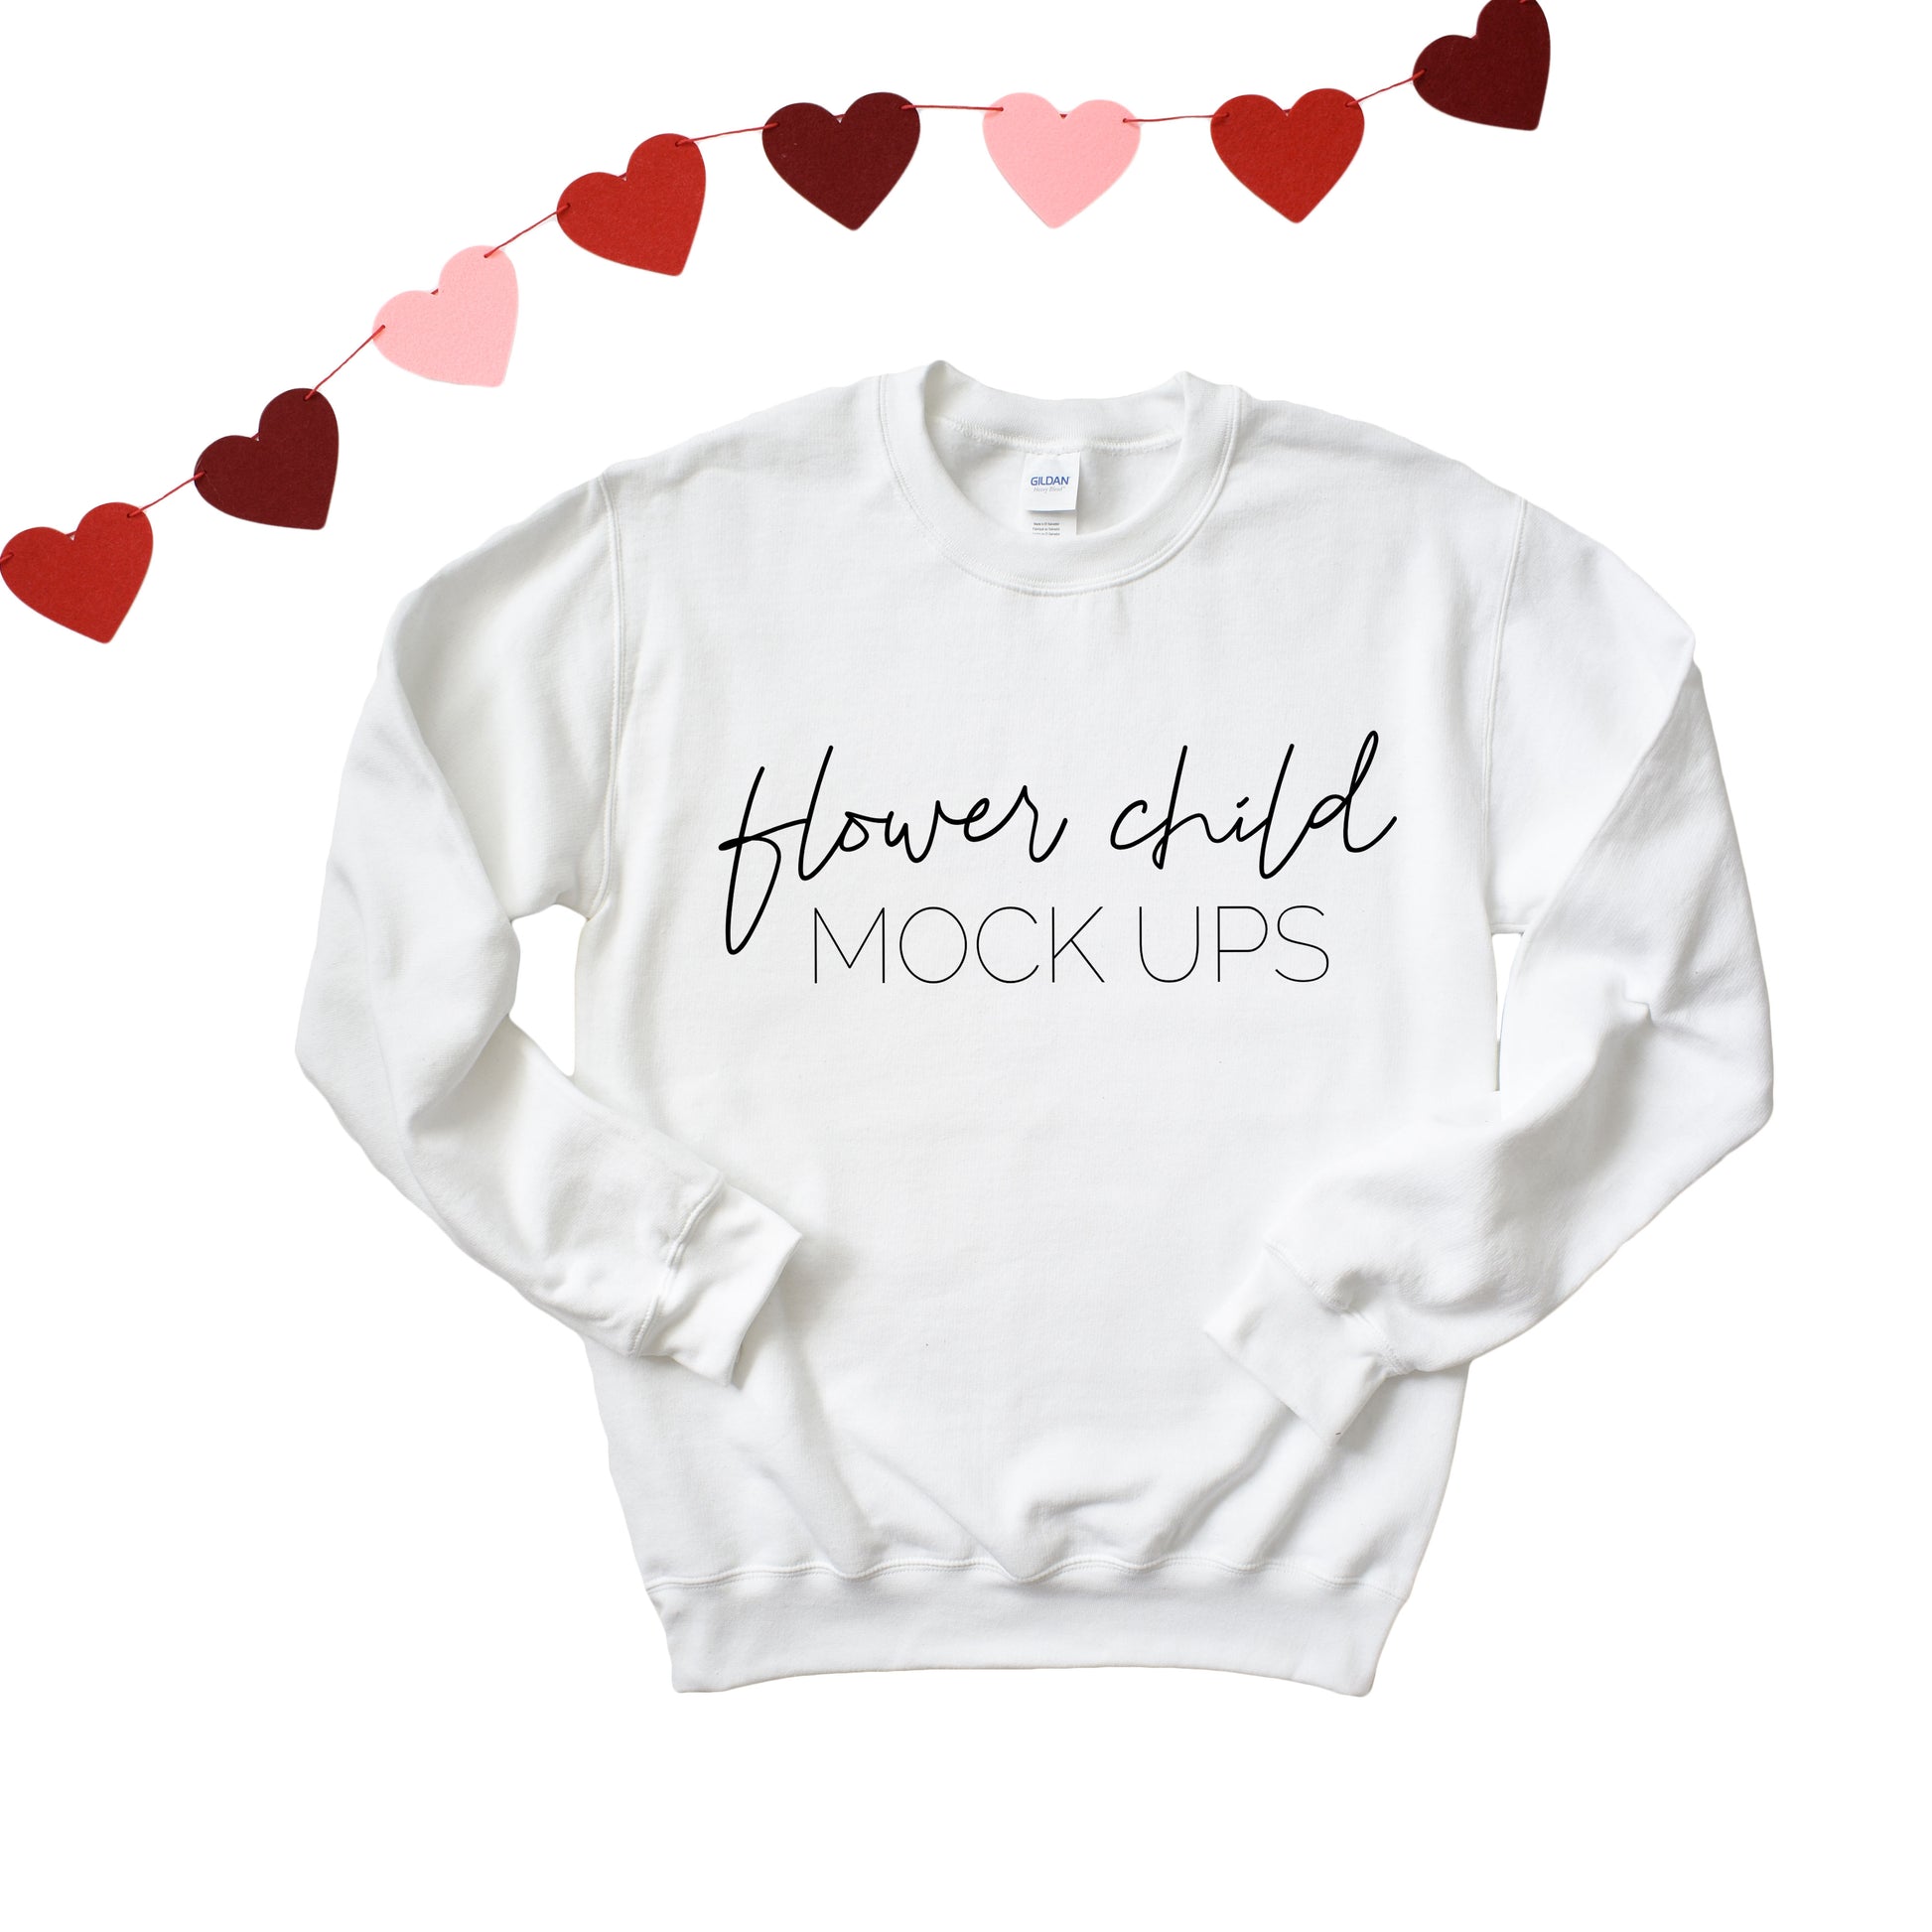 Gildan 180 White Sweatshirt Valentine's Day Mockup - flowerchildmockups